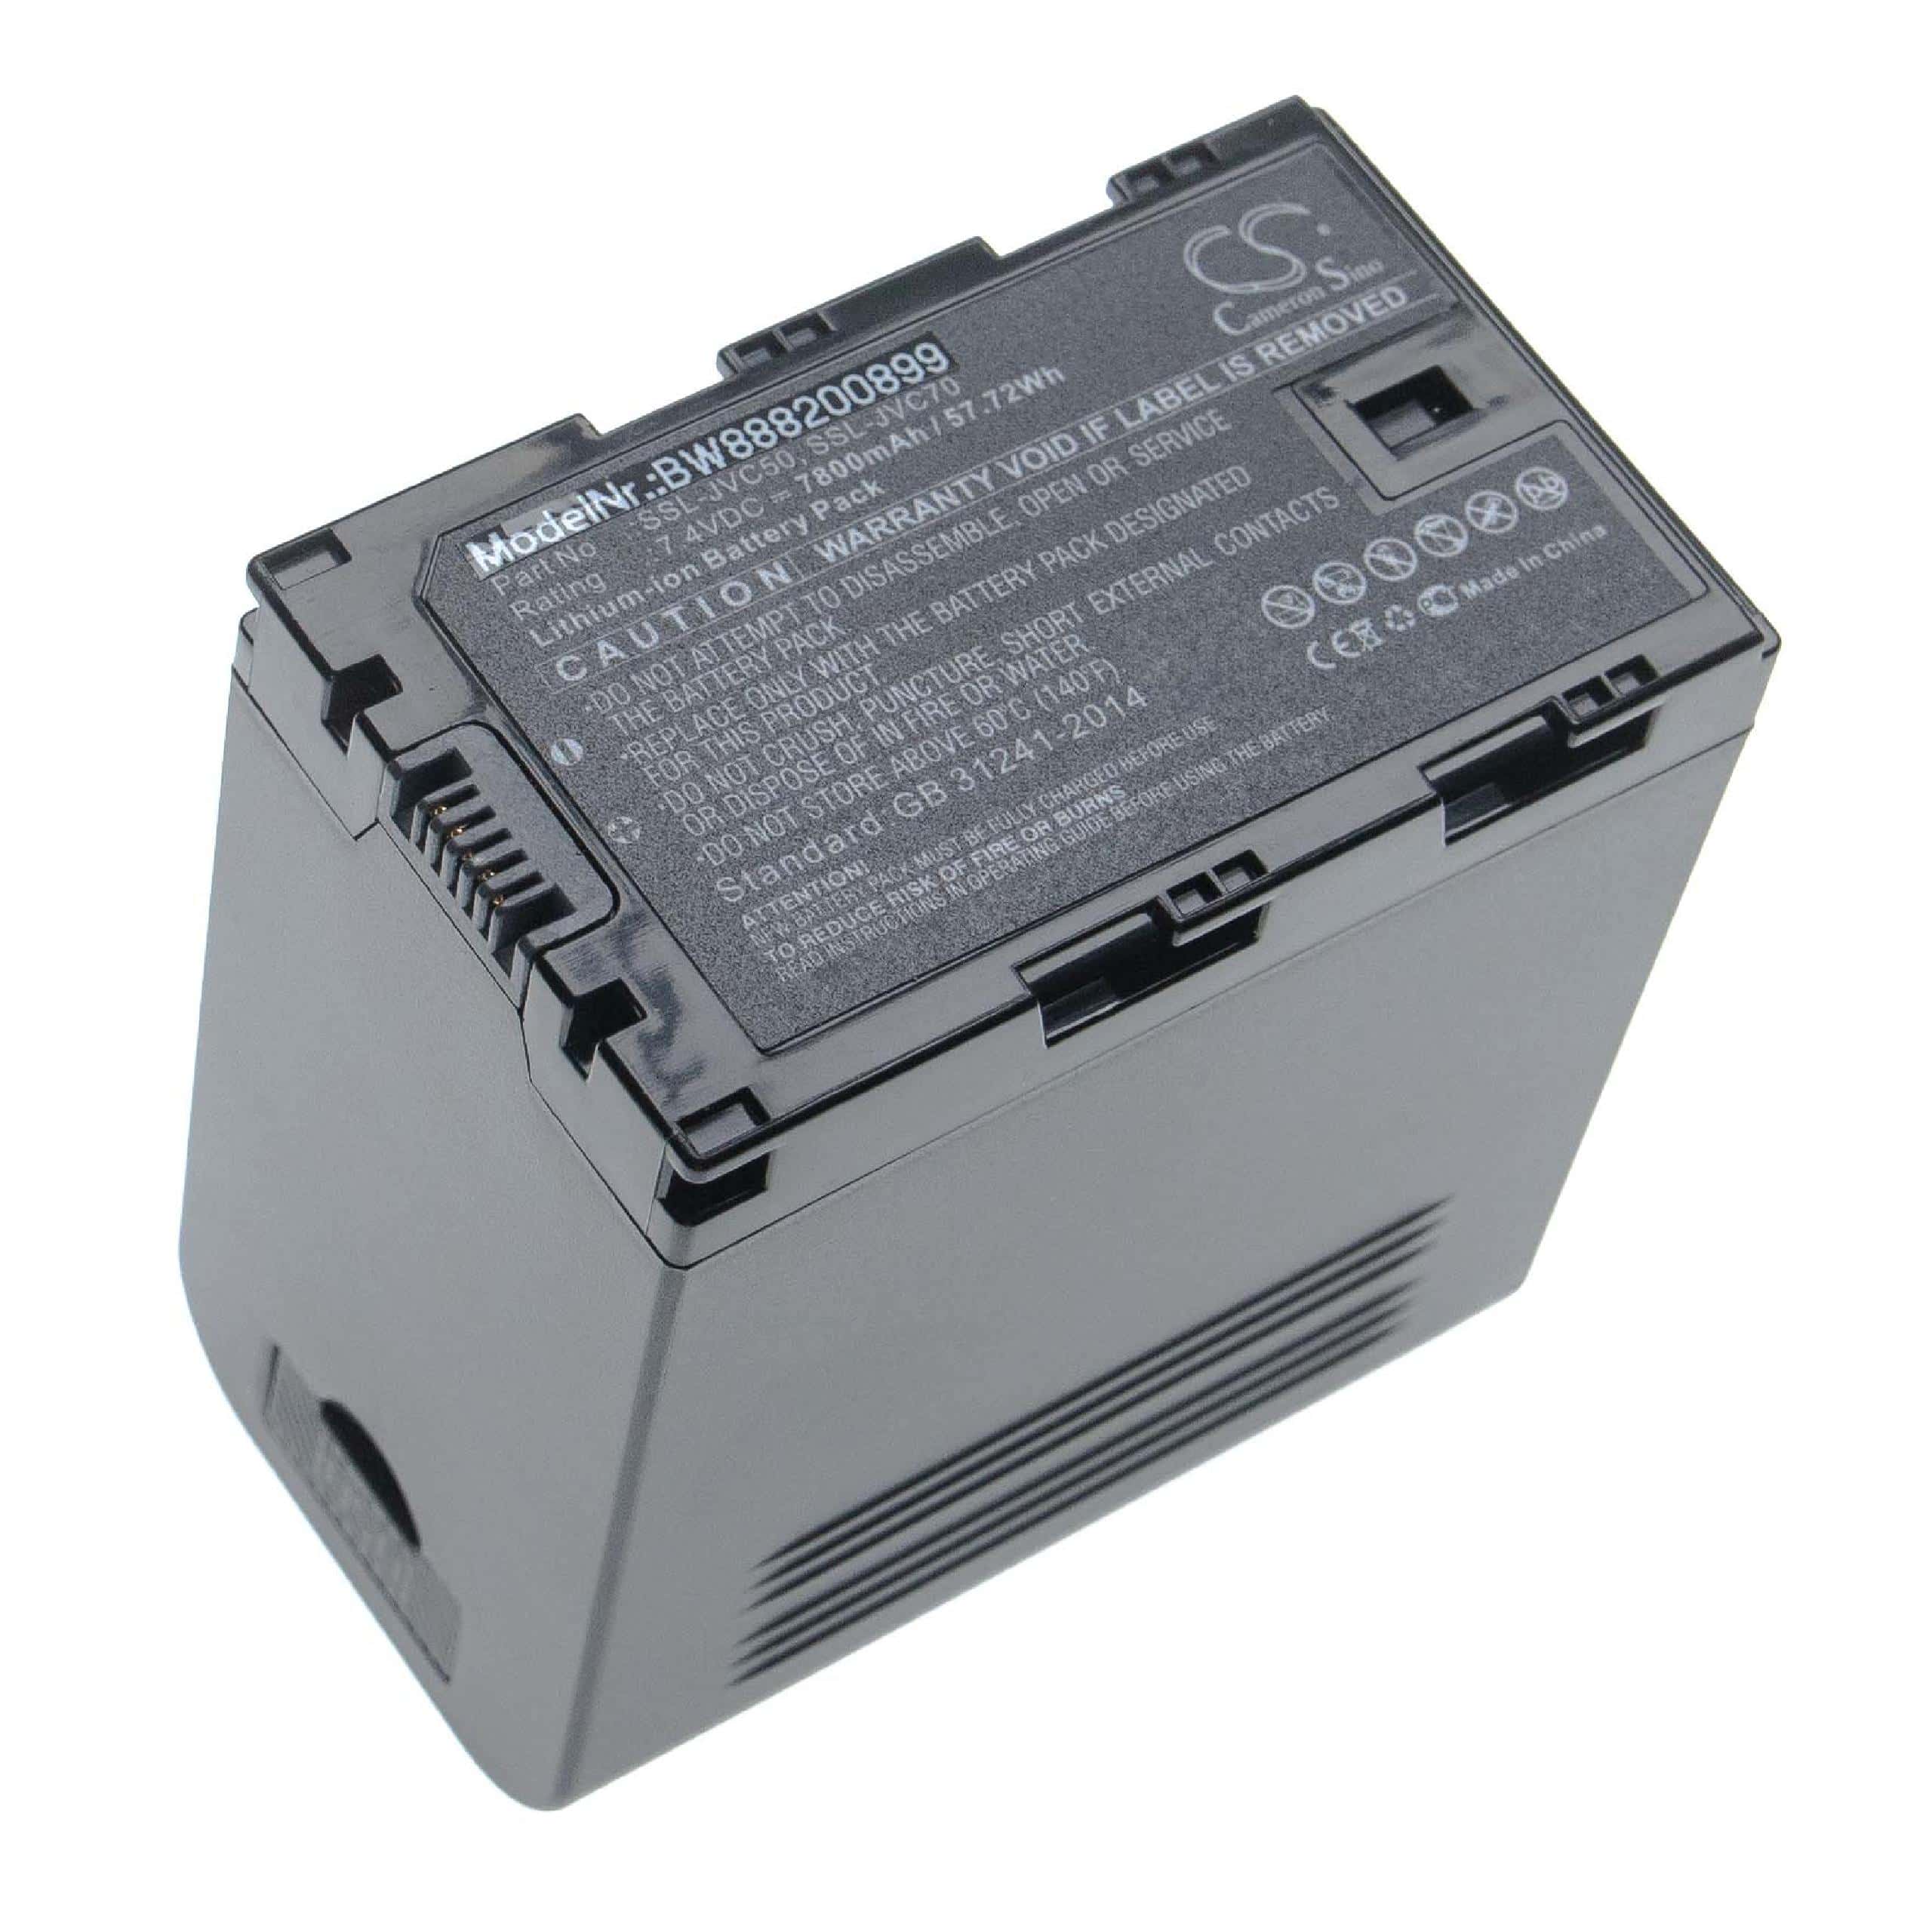 Batteria per videocamera sostituisce JVC SSL-50, SSL-70 JVC - 7800mAh 7,4V Li-Ion con presa USB